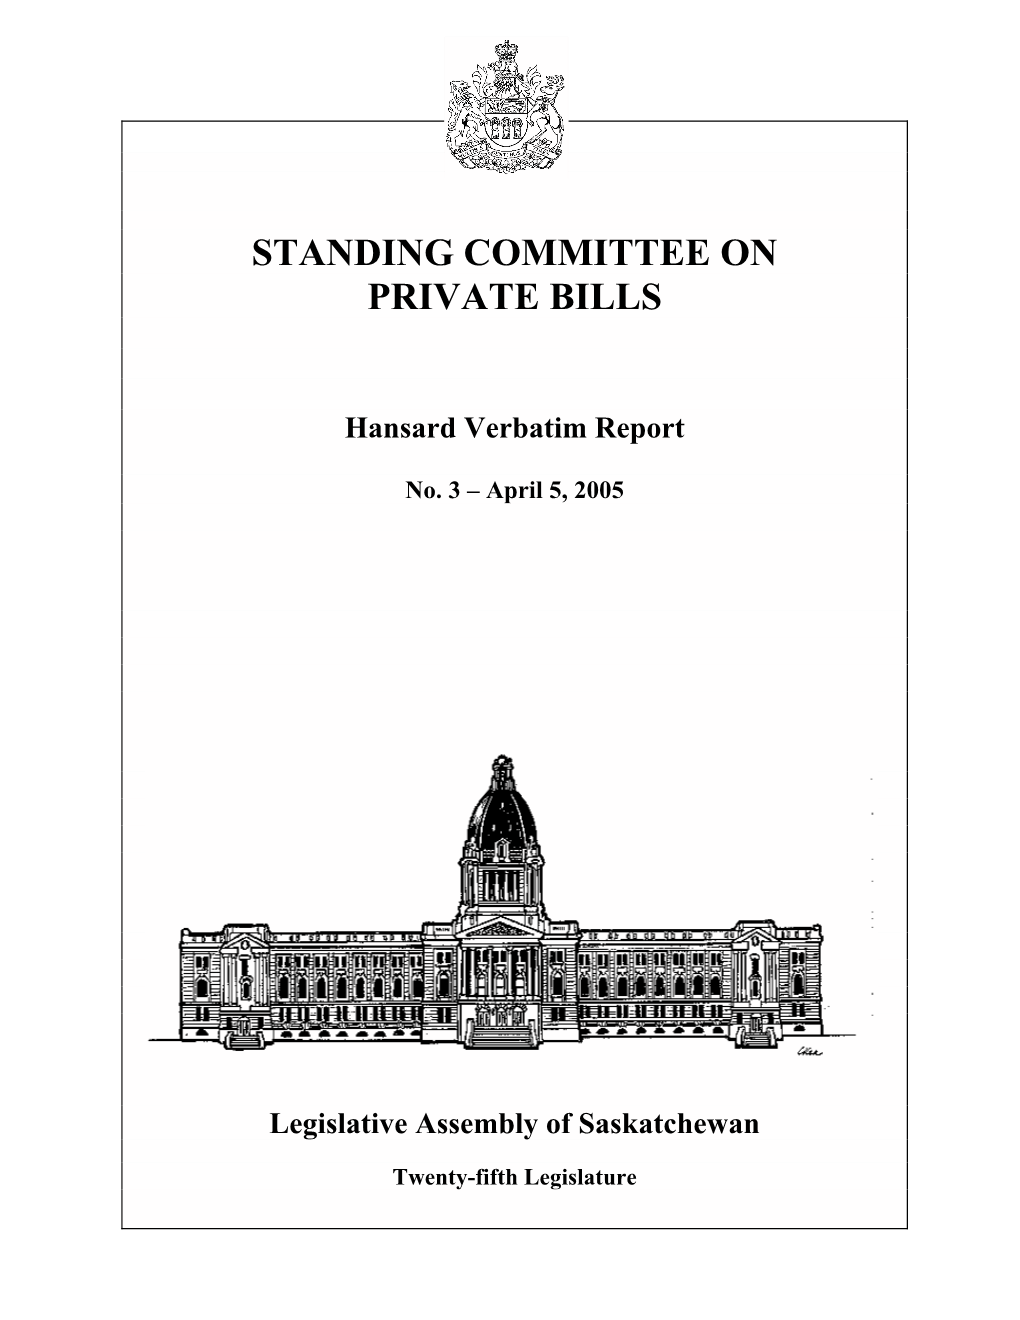 April 5, 2005 Private Bills Committee